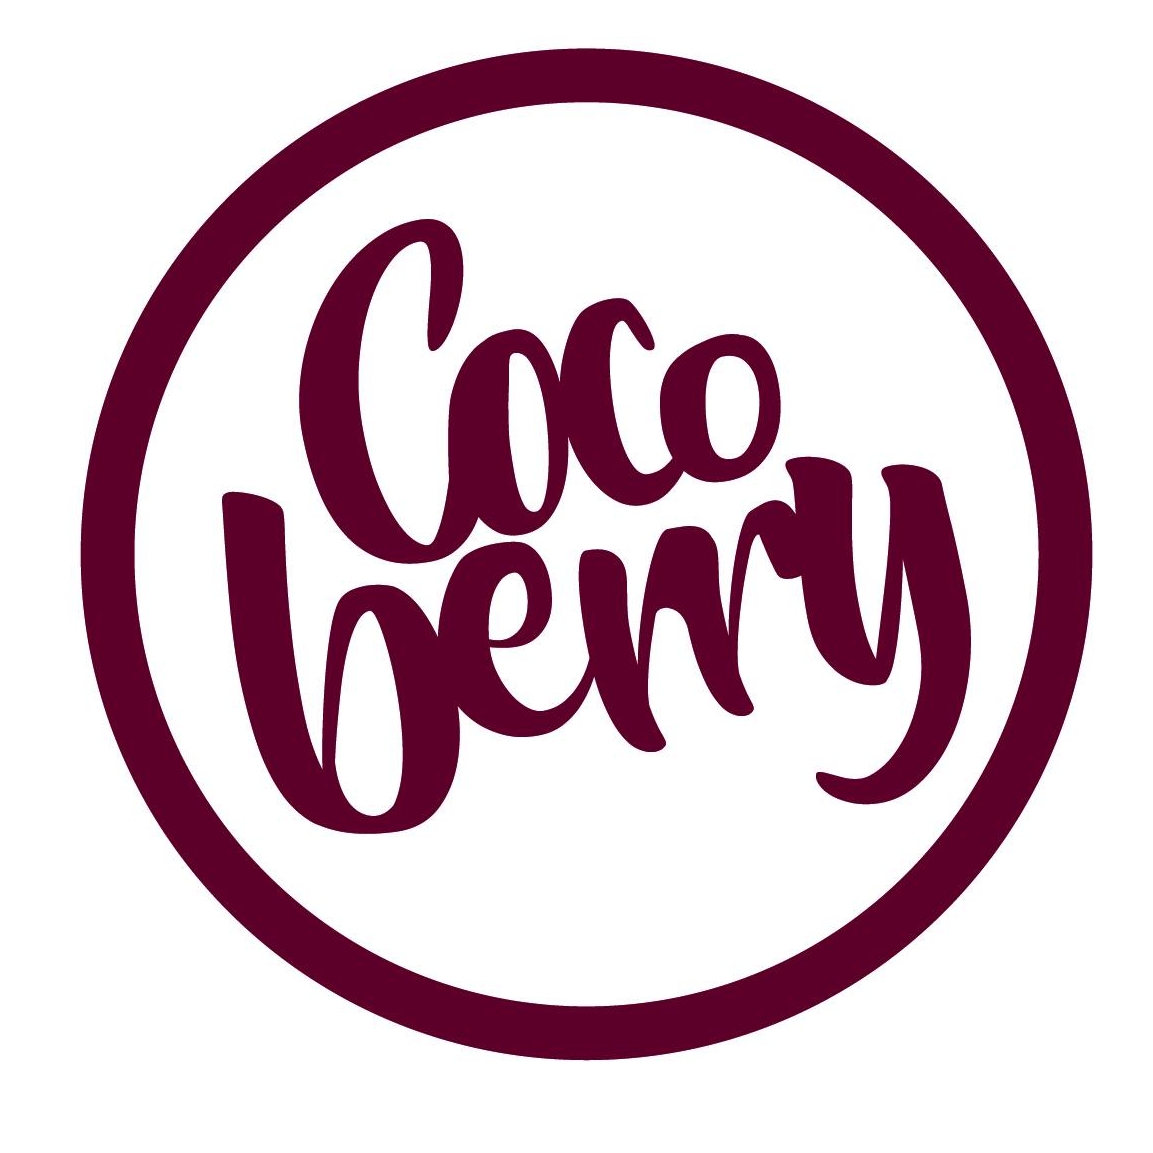 cocoberry1.jpg